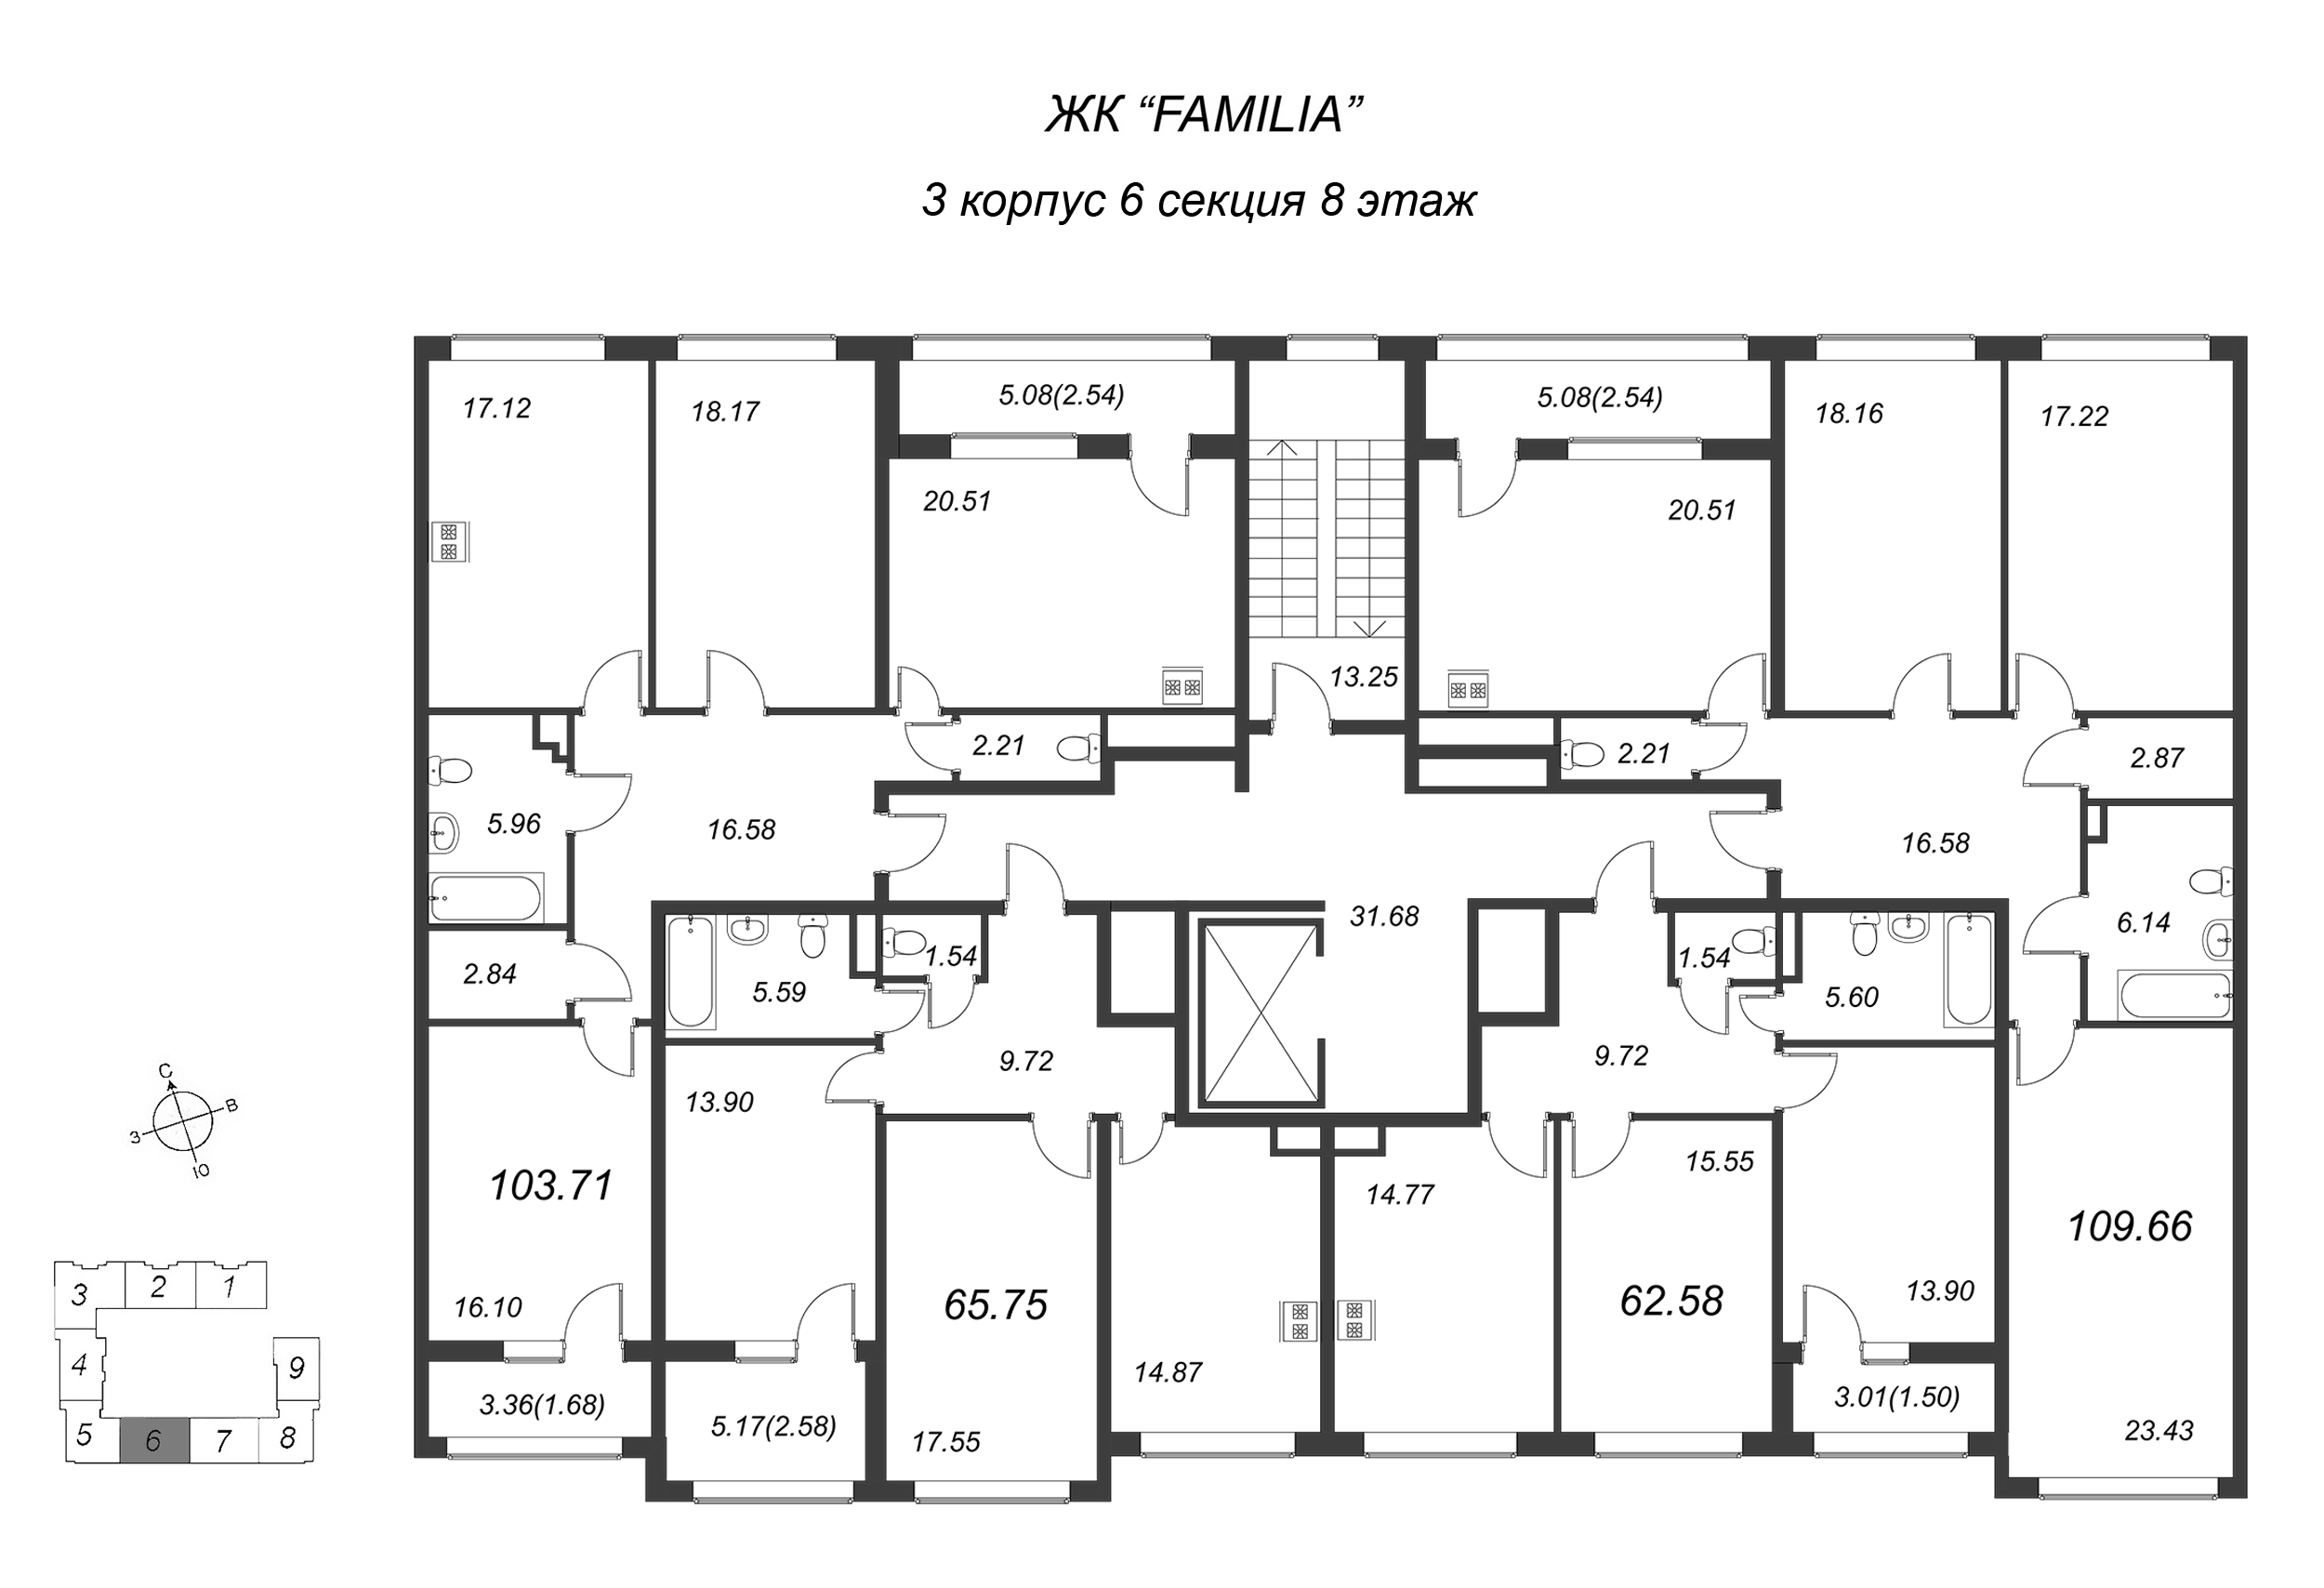 4-комнатная (Евро) квартира, 110.2 м² - планировка этажа